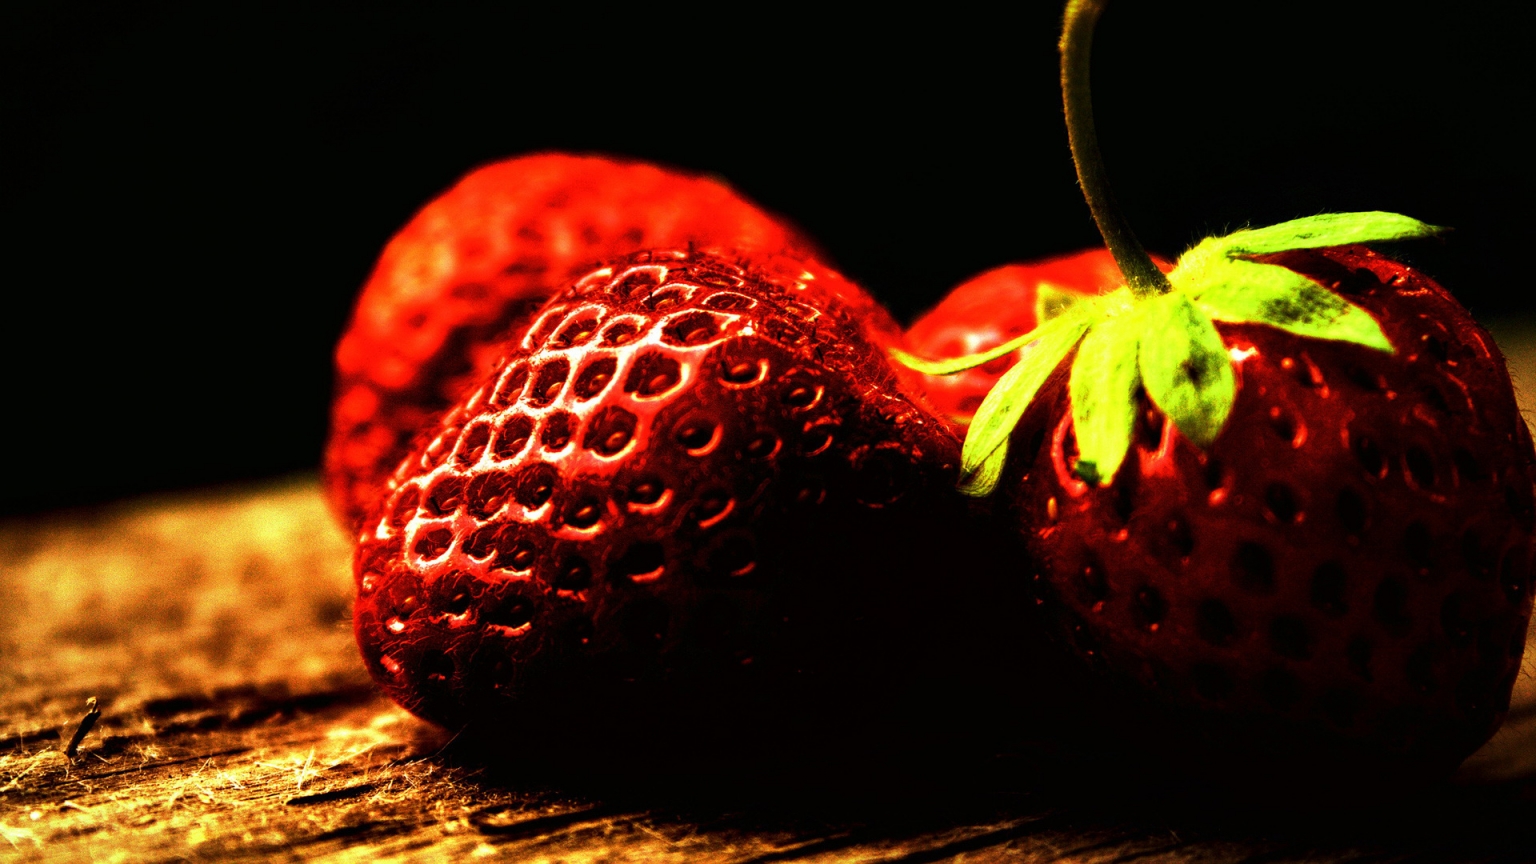 Strawberry for 1536 x 864 HDTV resolution